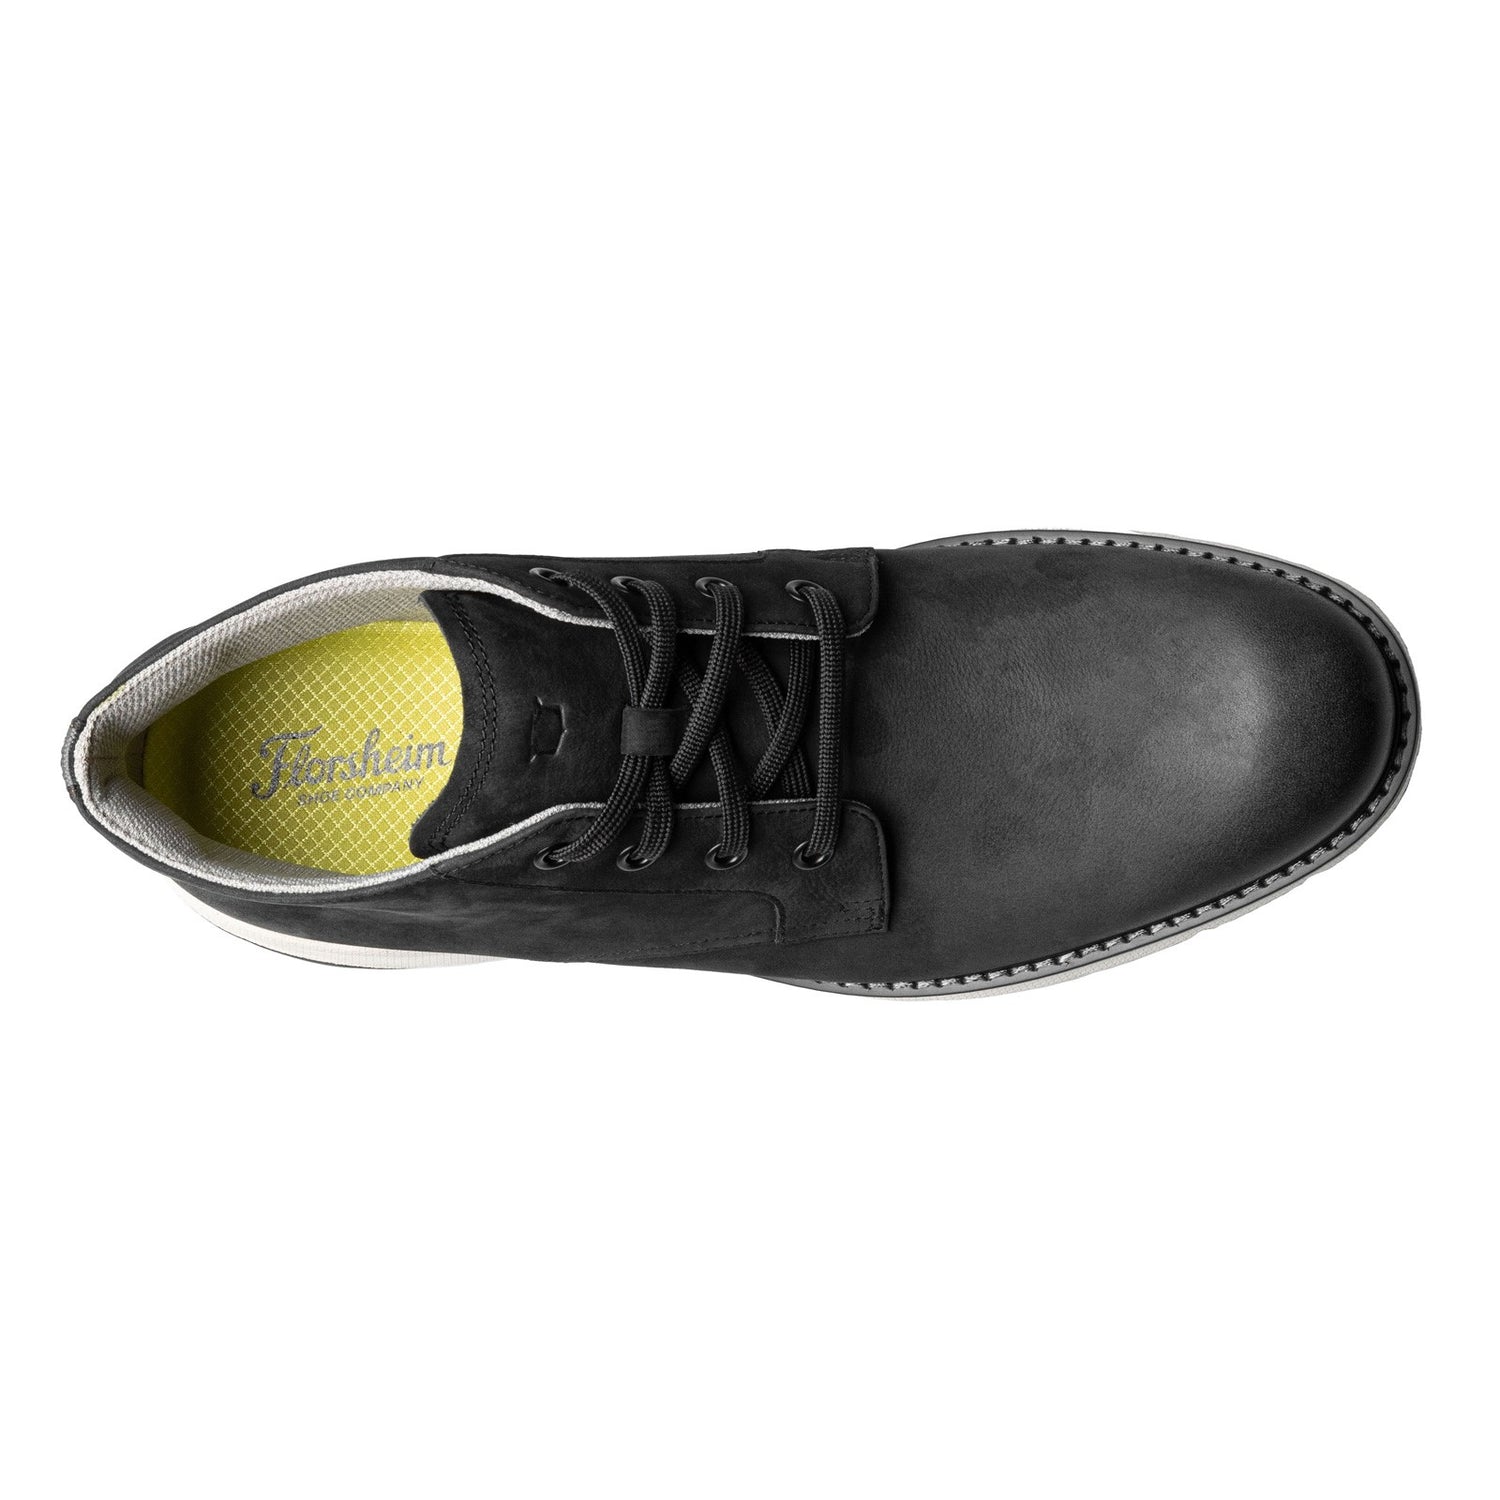 Peltz Shoes  Men's Florsheim Frenzi Plain Toe Chukka Boot BLACK NUBUCK 14383-006